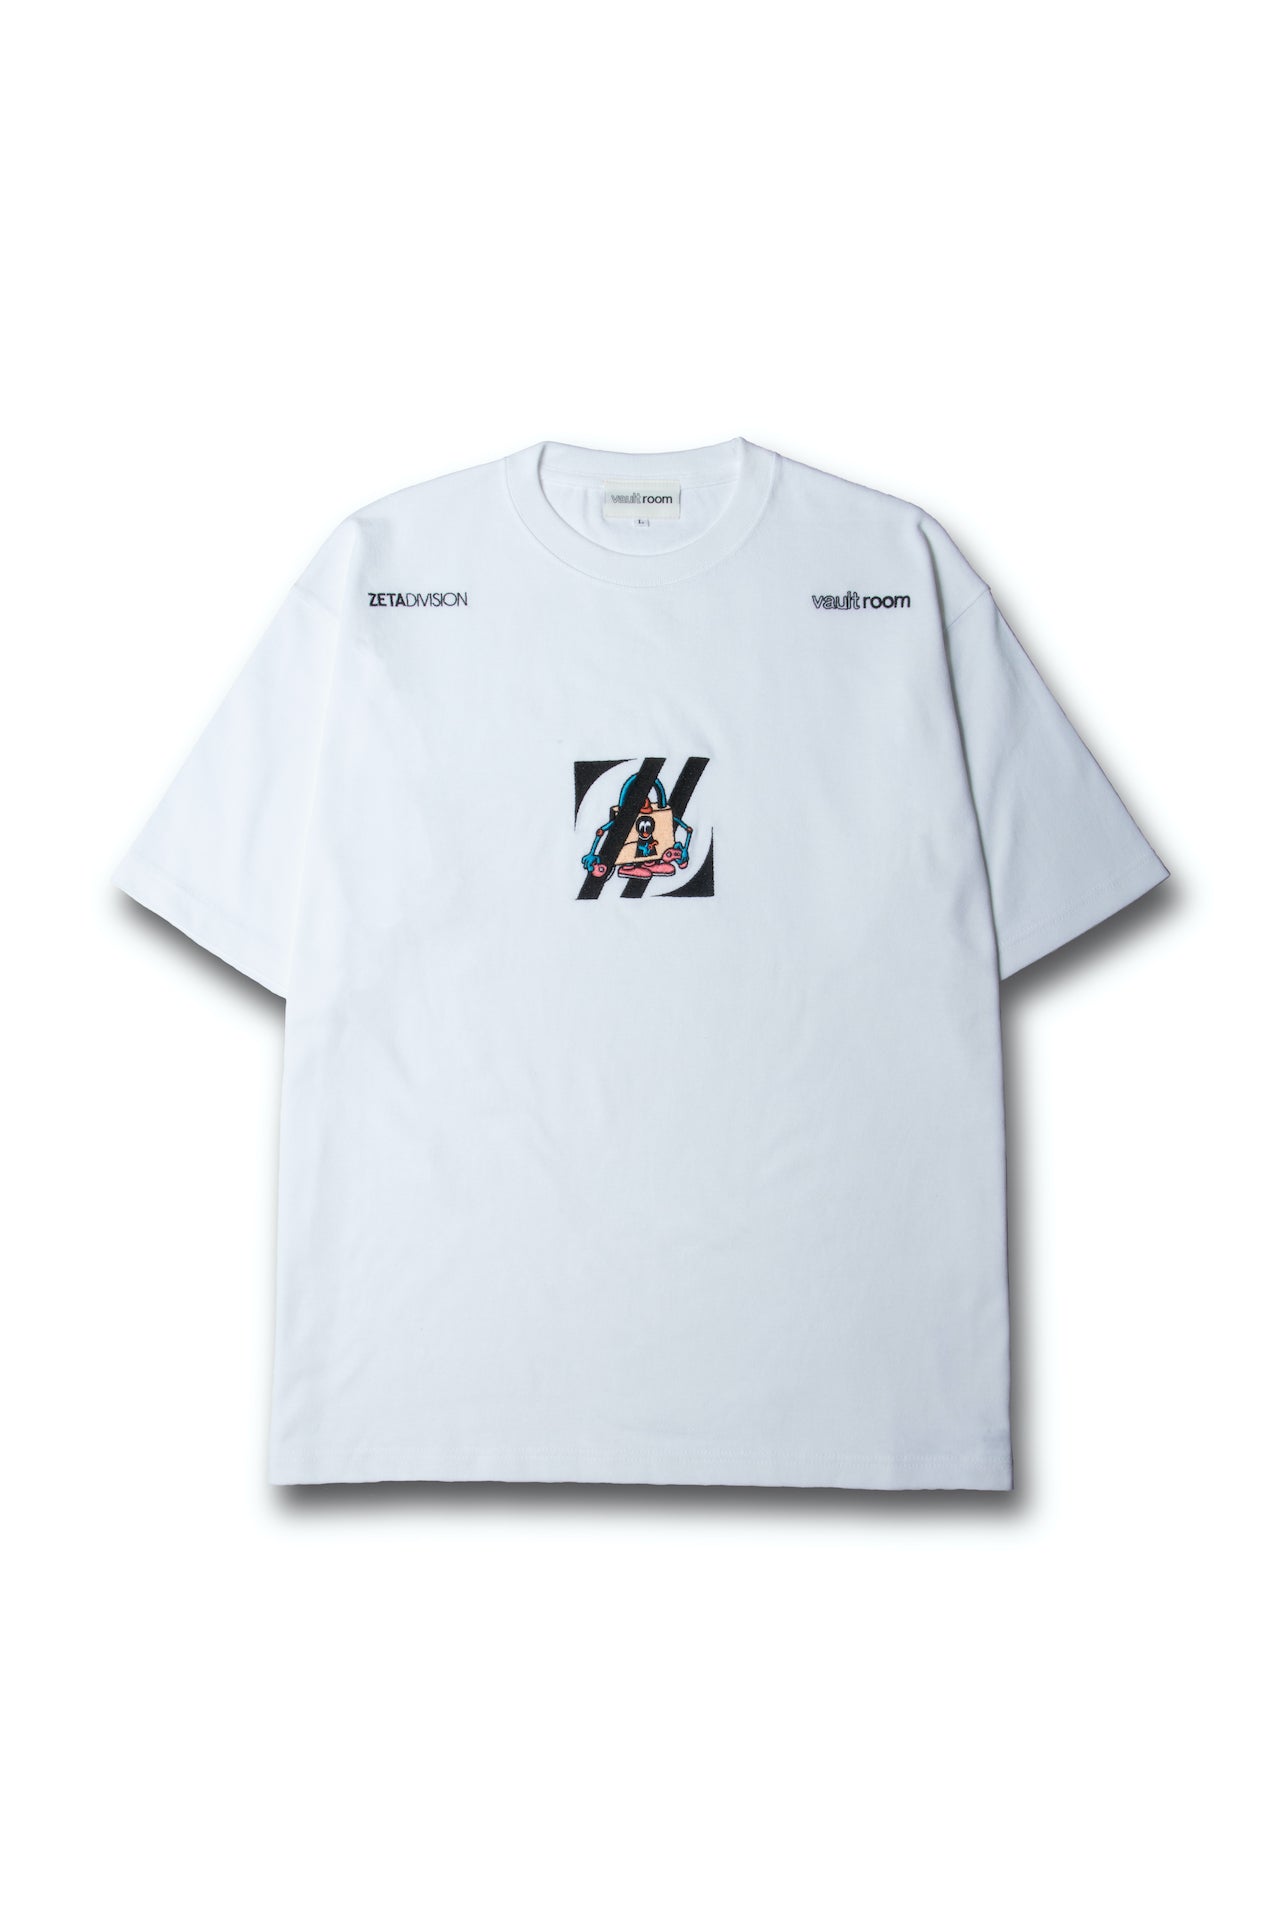 vaultroom LOGO tee - Tシャツ/カットソー(半袖/袖なし)